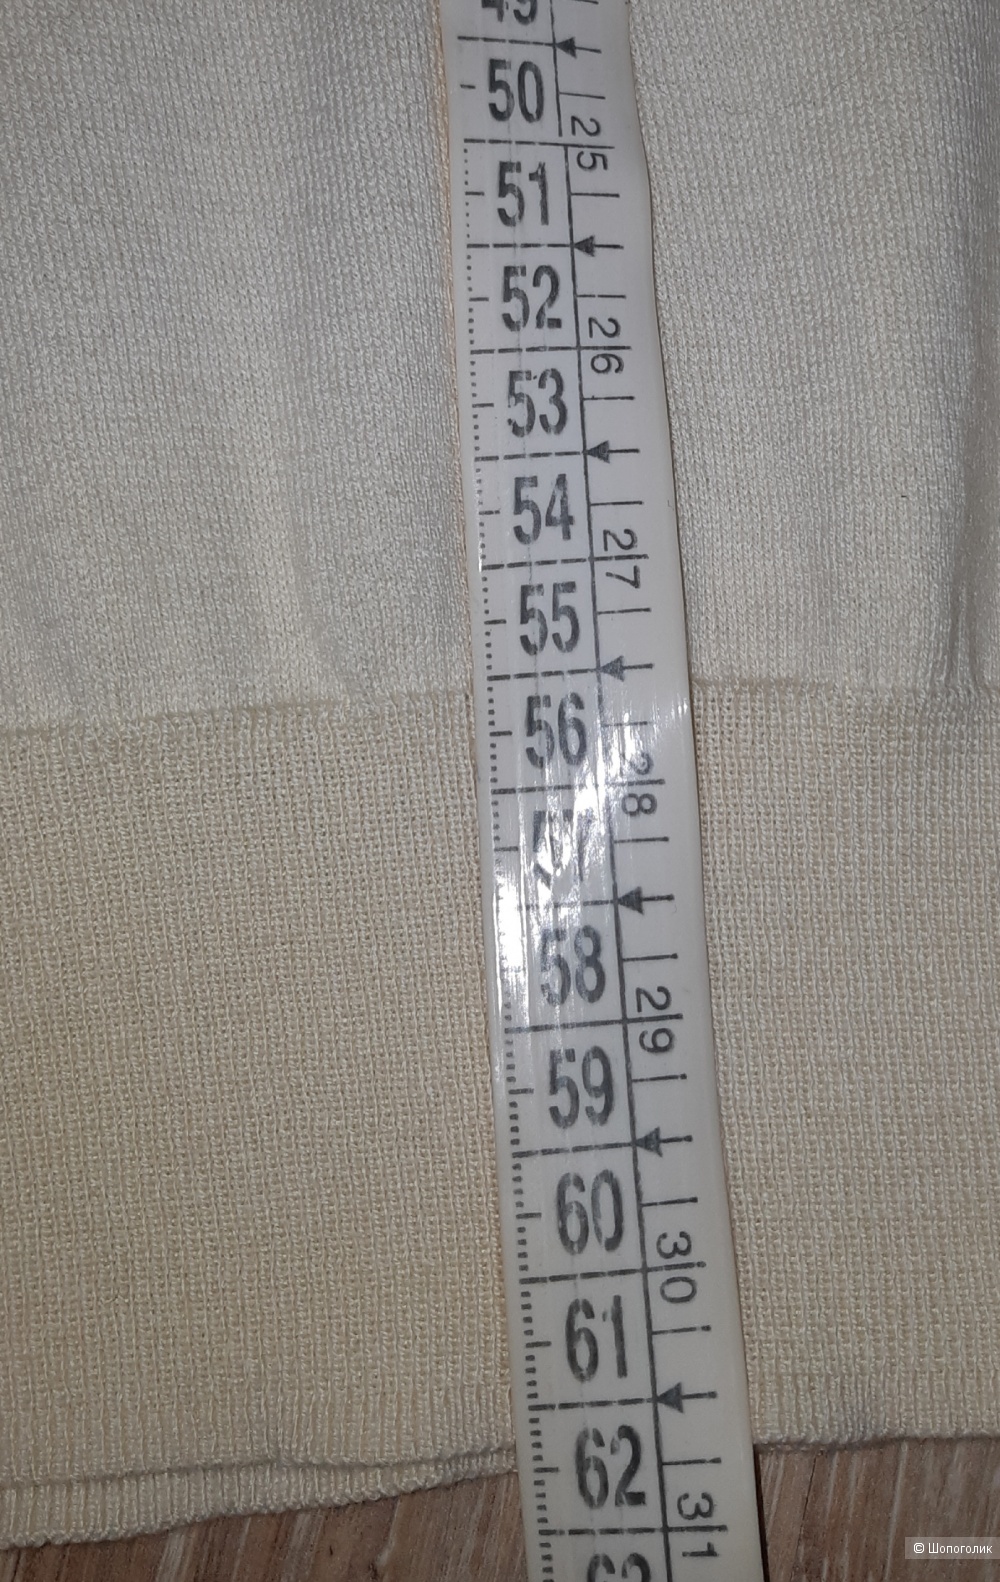 Пуловер polo ralph lauren, размер s